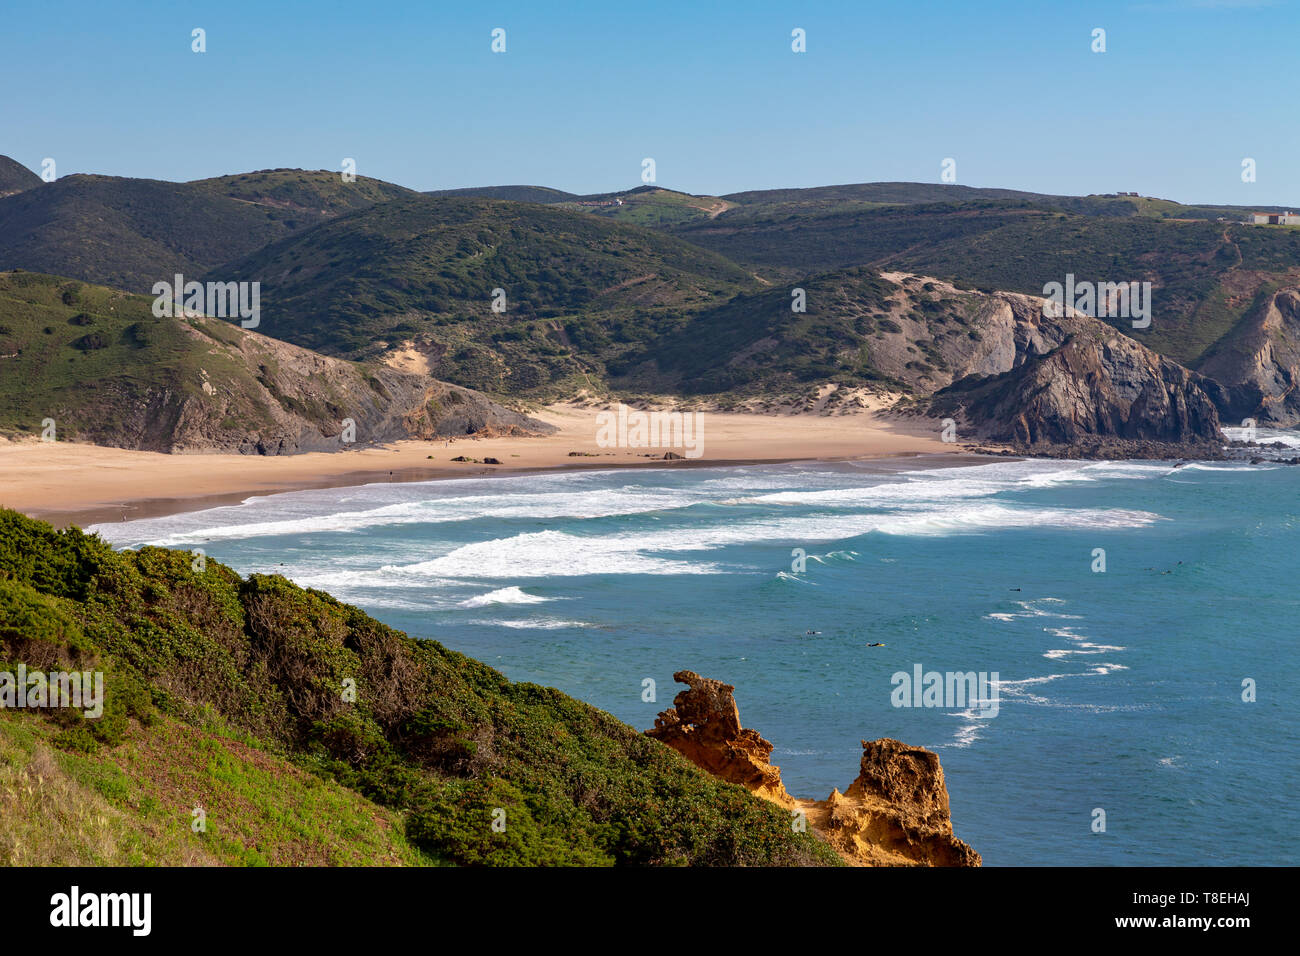 Praia do Amado in the Costa Vicentina natural park at the Atlantic Ocean at the Algarve, Portugal. Stock Photo